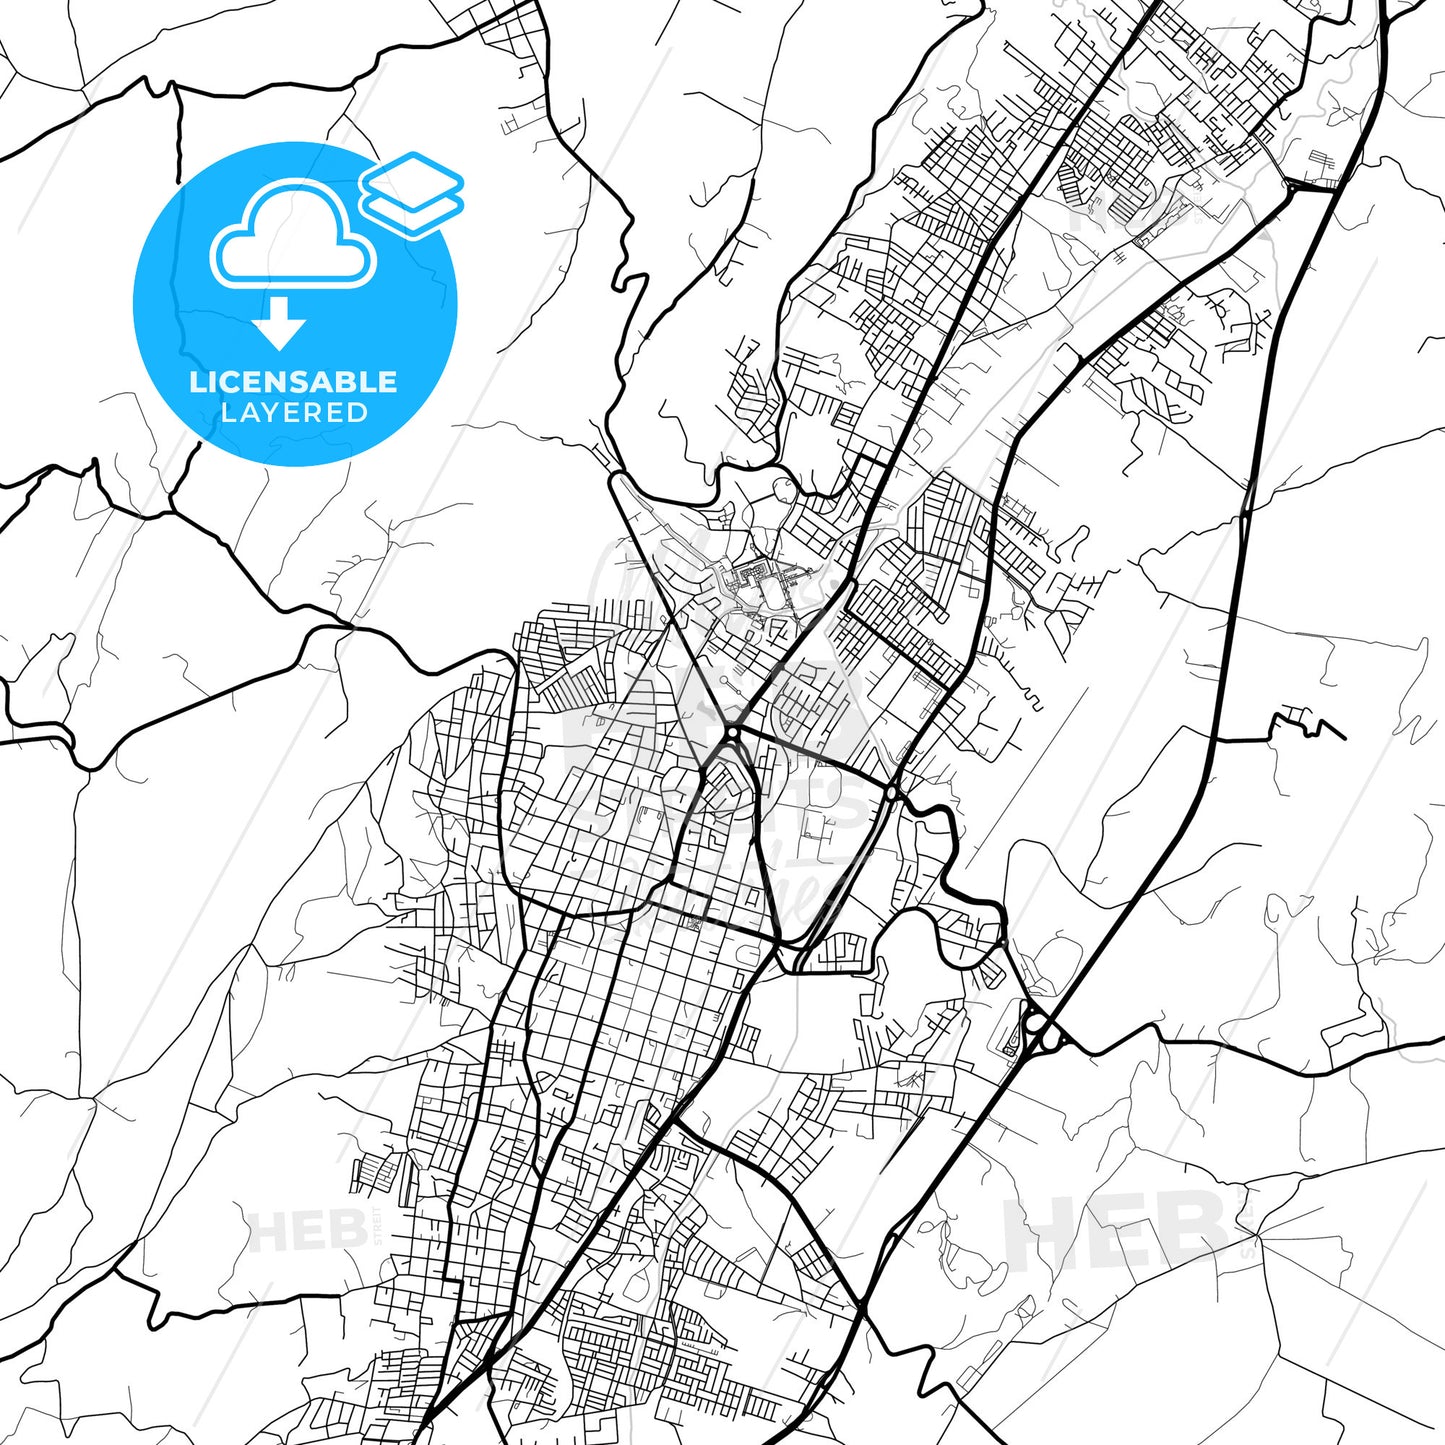 Layered PDF map of Tunja, Colombia